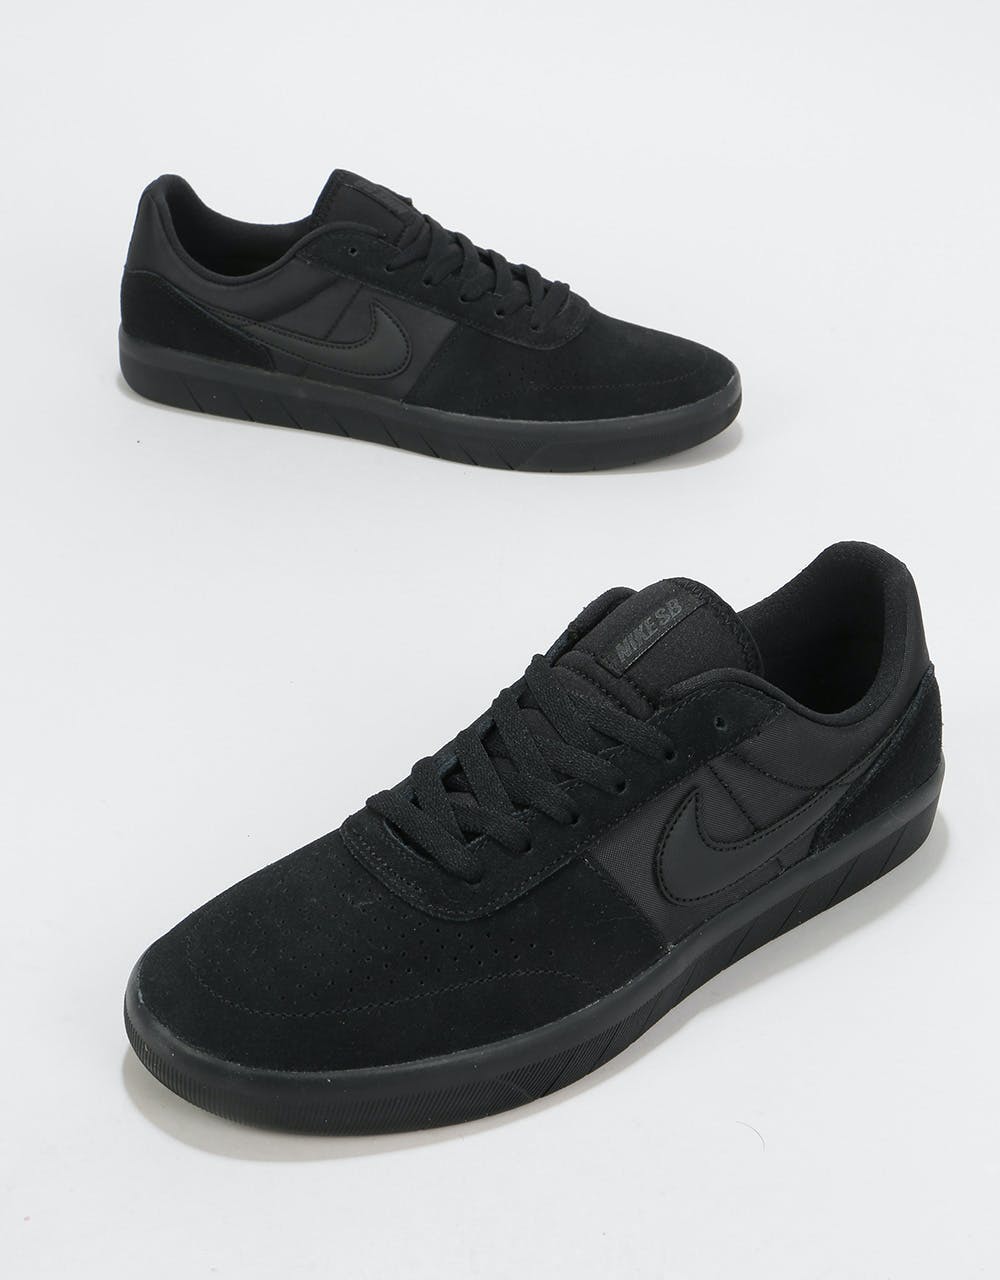 Nike SB Team Classic Skate Shoes - Black/Black-Anthracite